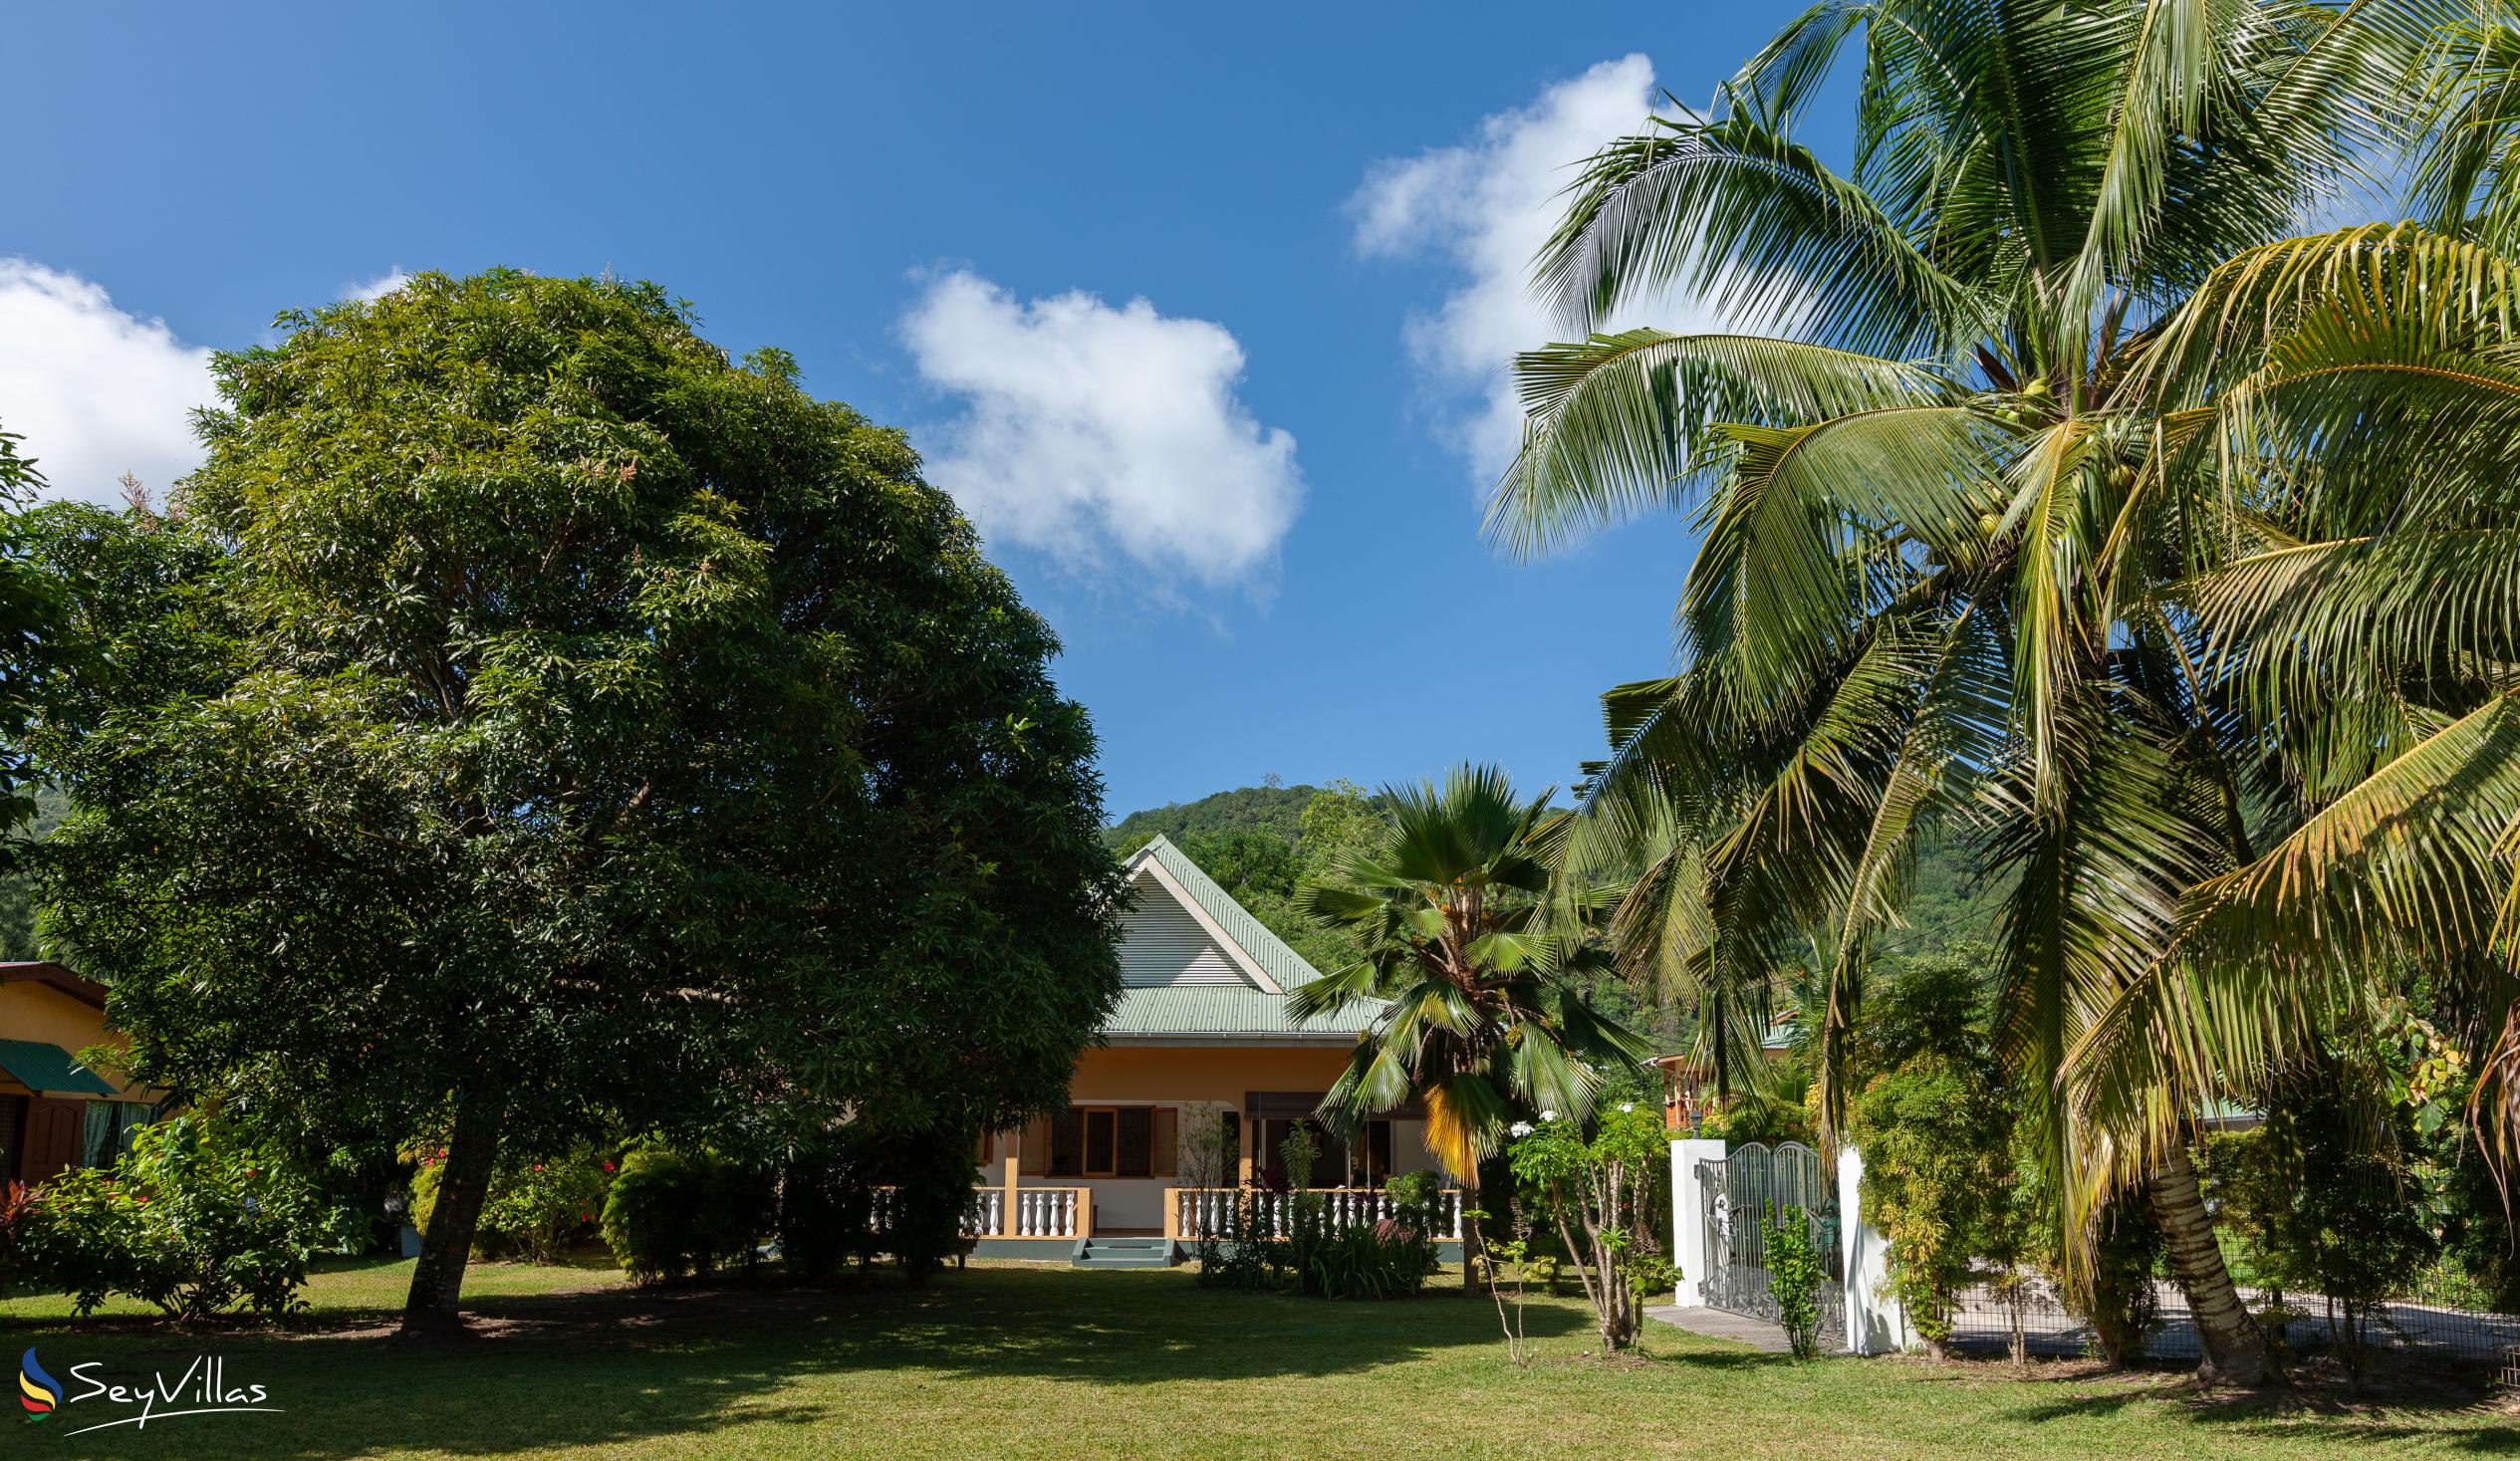 Photo 5: Chez Marlin - Outdoor area - Praslin (Seychelles)